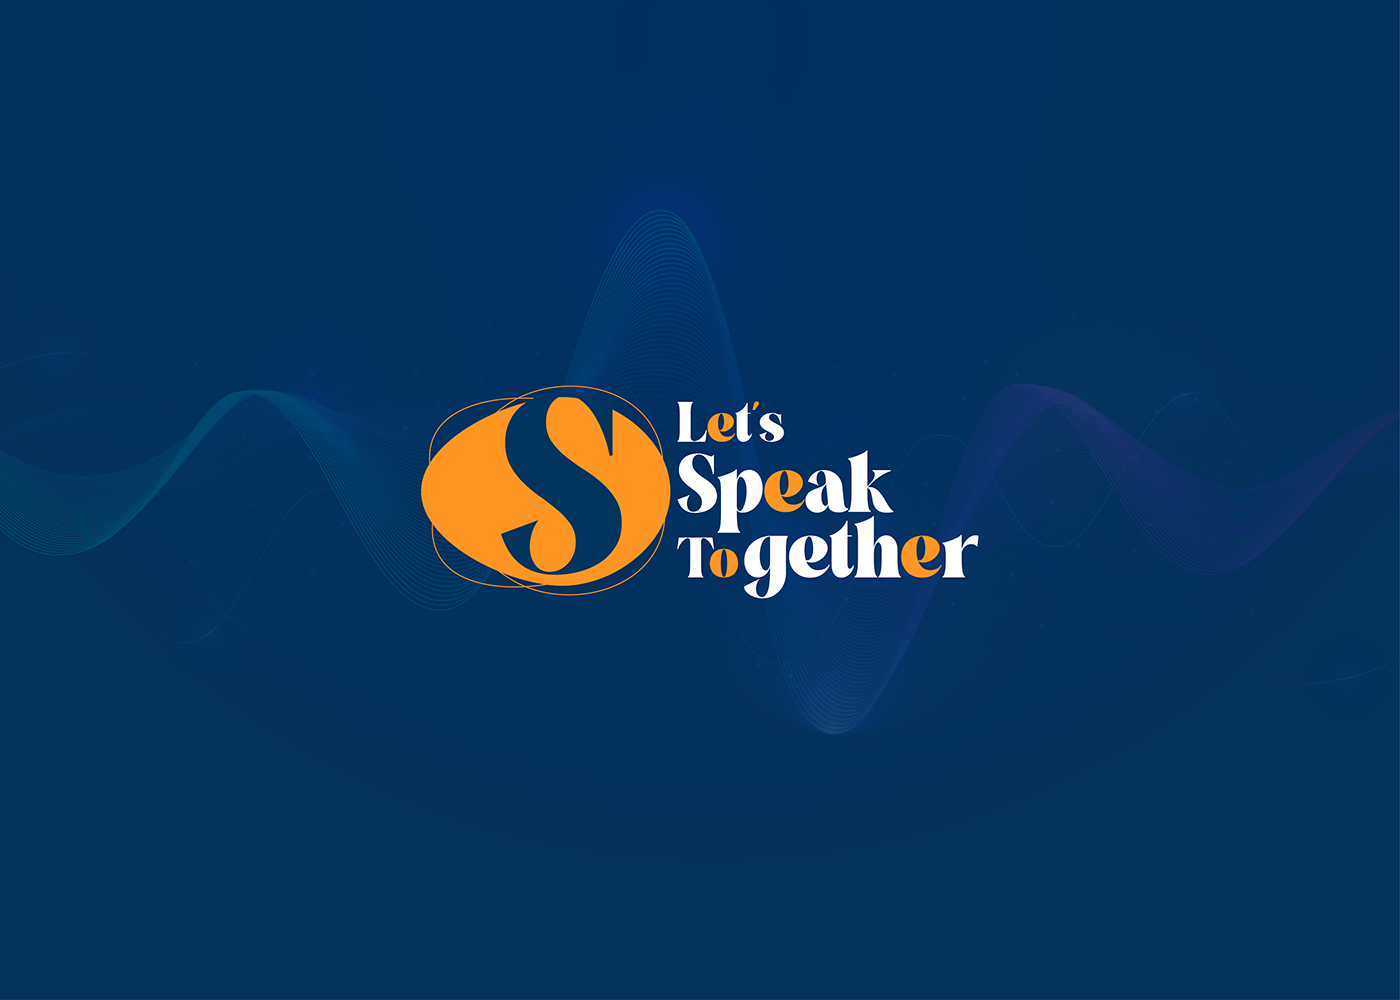 Branding speak together Program #branding #speaktogetherprogram #identity #creativebranding #logos